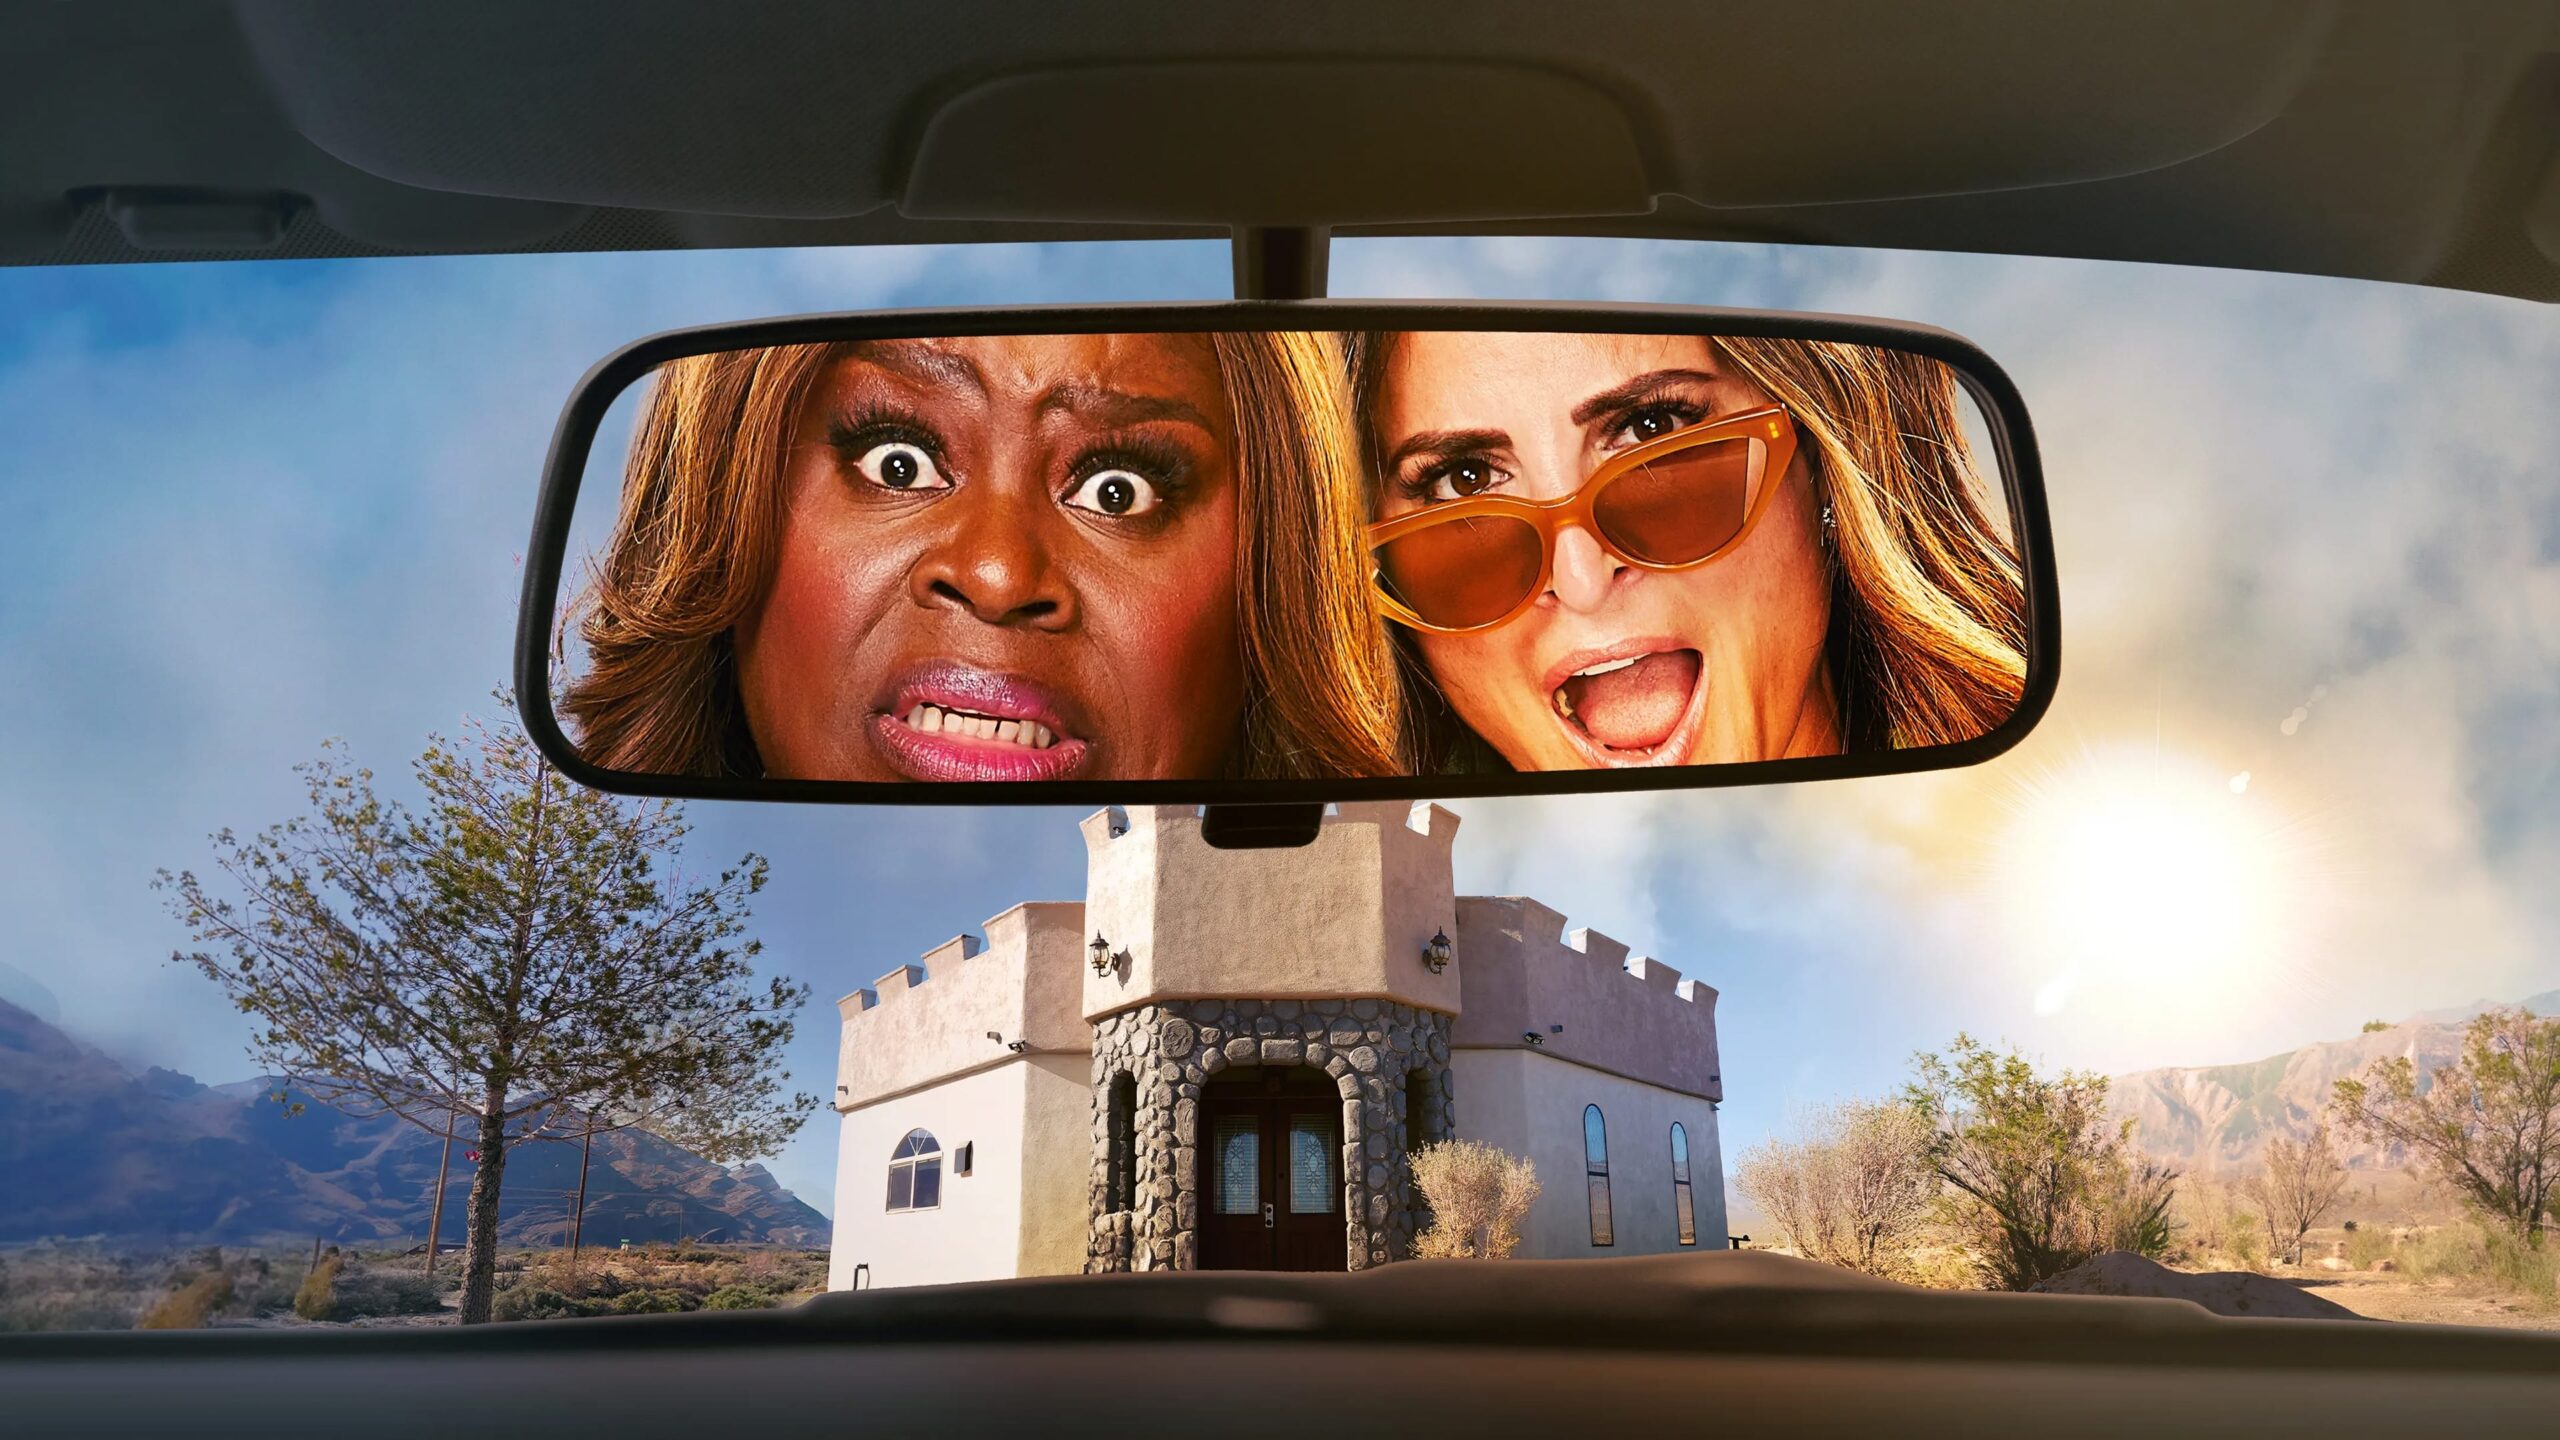 Ugliest House in America season 4